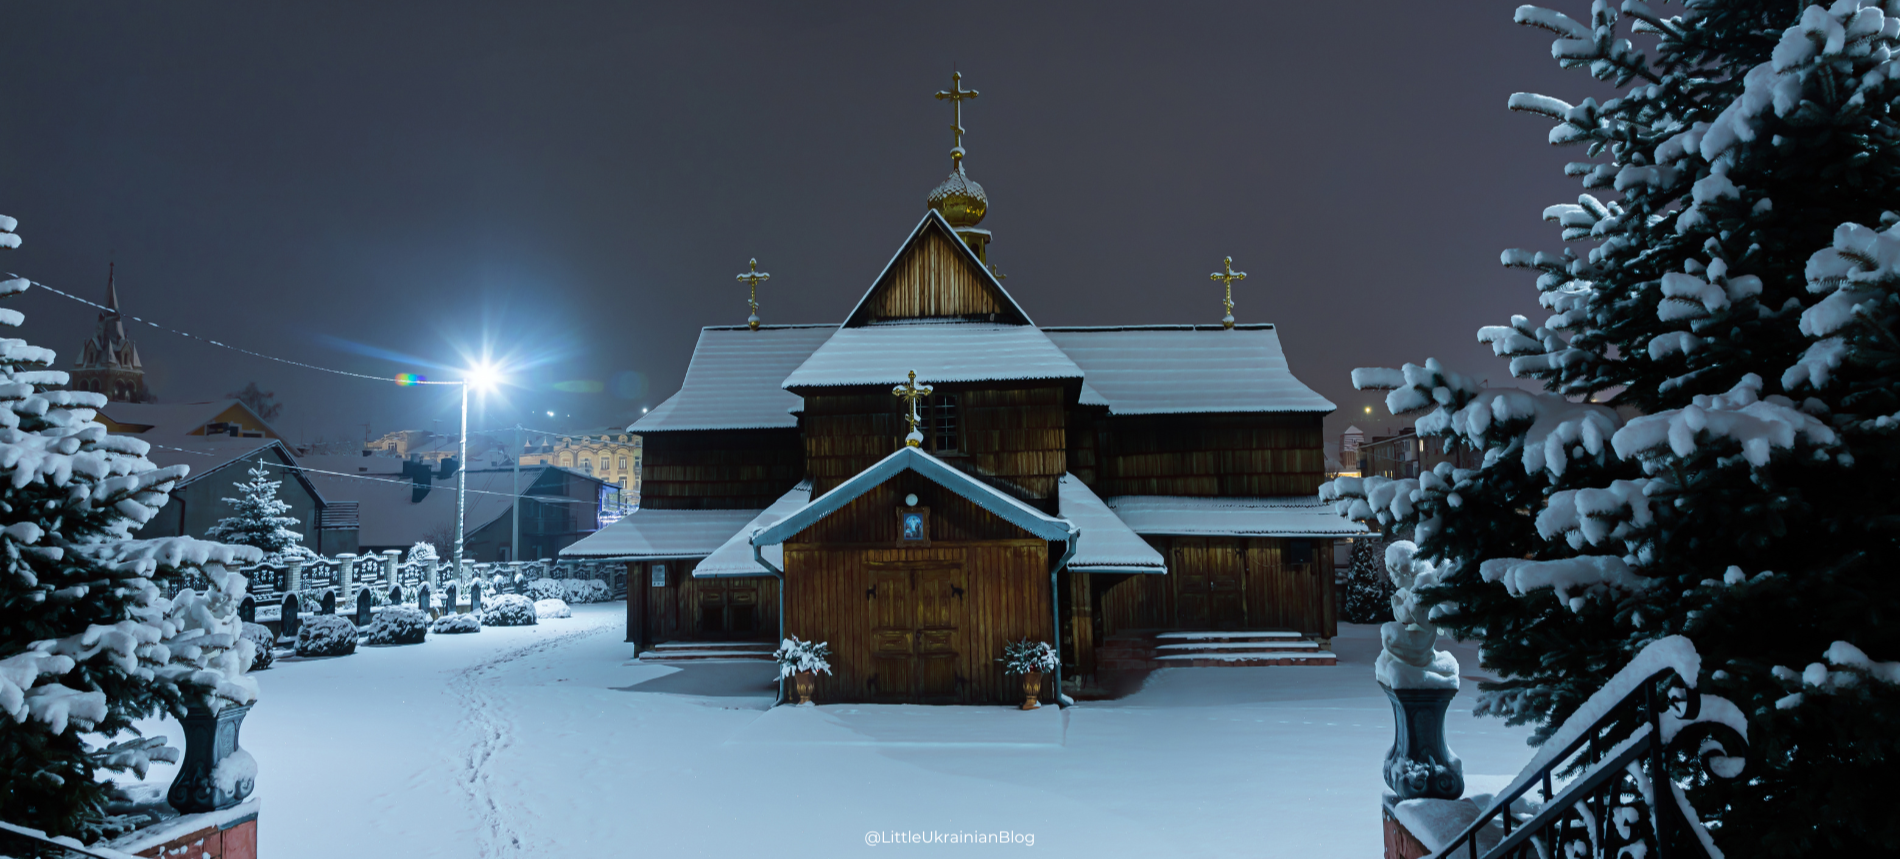 Sviatyi Vechir, Святий Вечір, Holy Evening, Christmas in Ukraine, Різдво в Україні, Village church at night, Ukrainian village, Ukrainian Church.